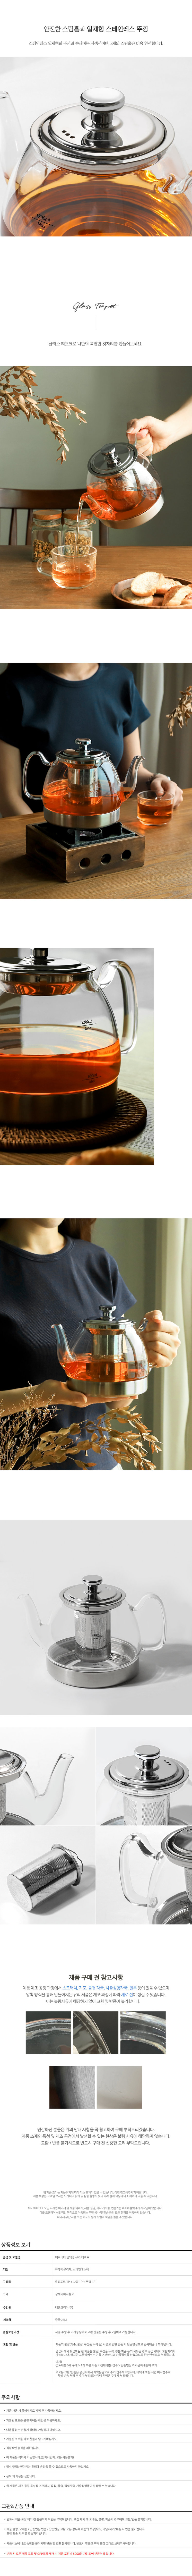 Pervita_Induction_Glass_Teapot_2.jpg